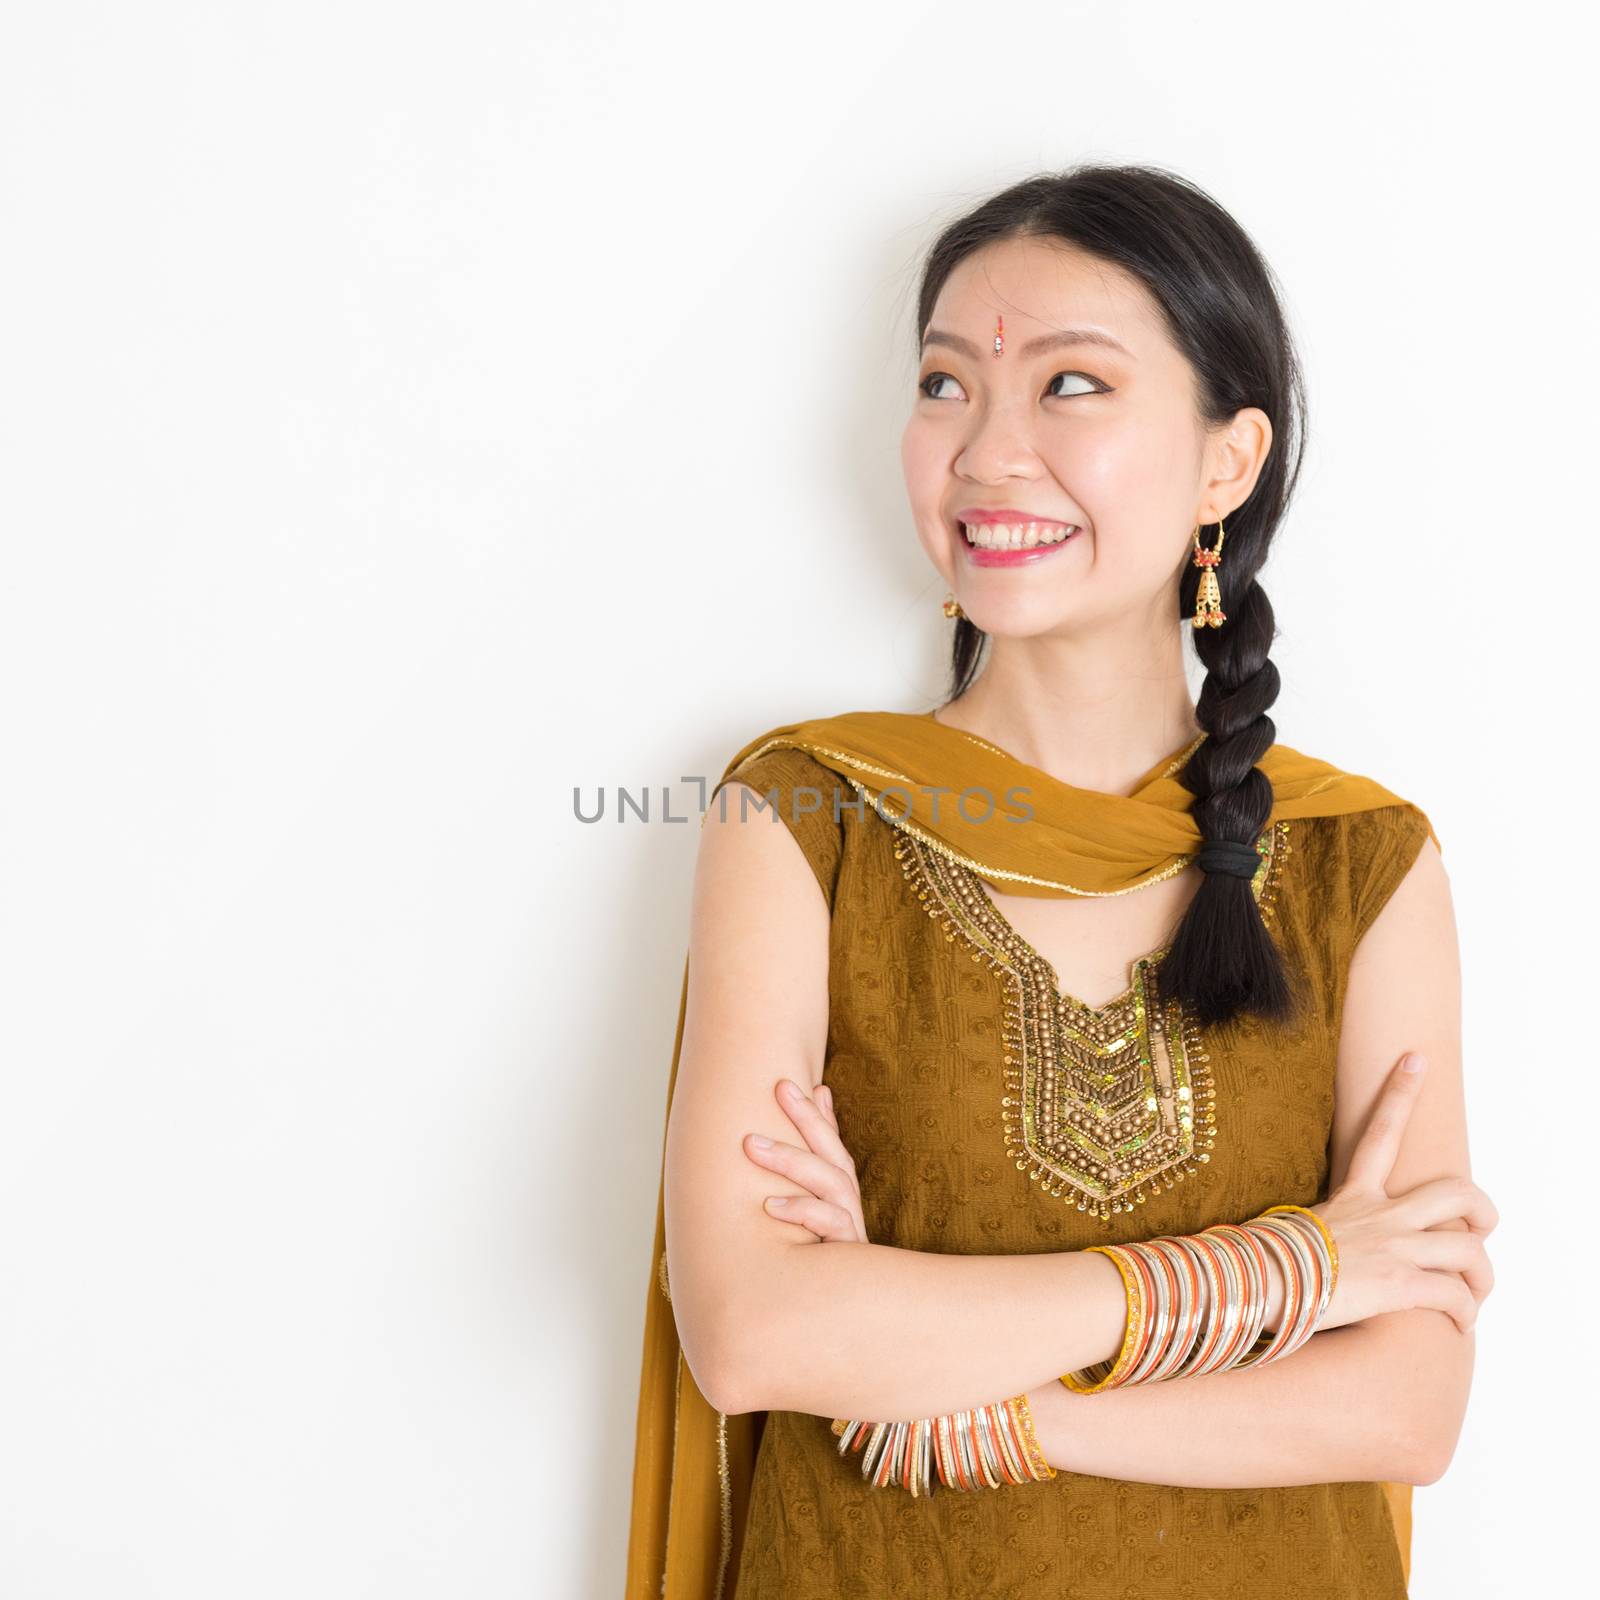 Mixed race Indian female in sari dress by szefei